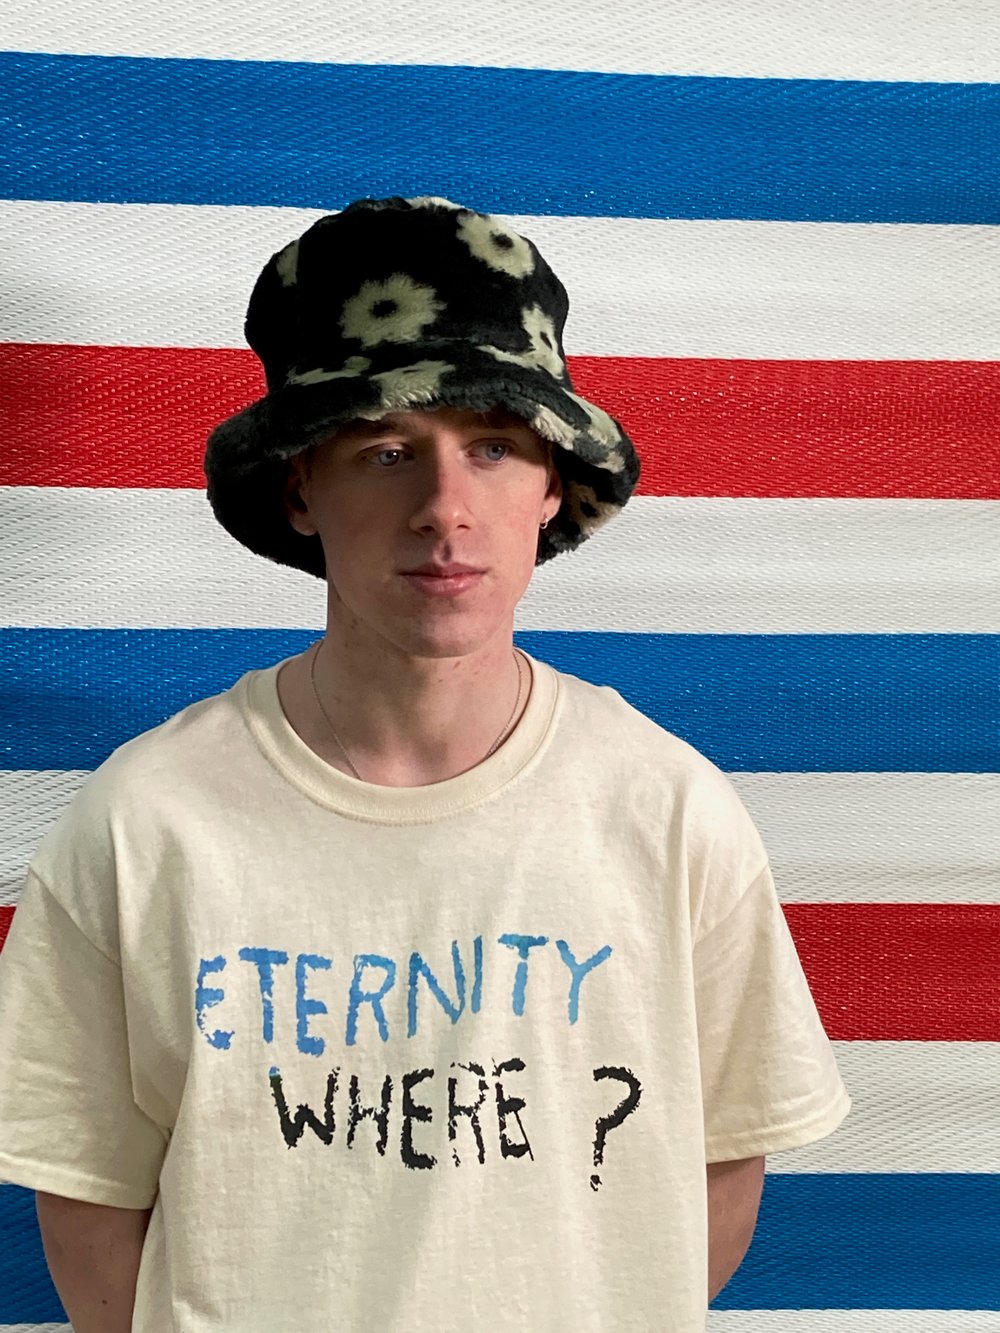 'Eternity Where ?" Natural T-Shirt